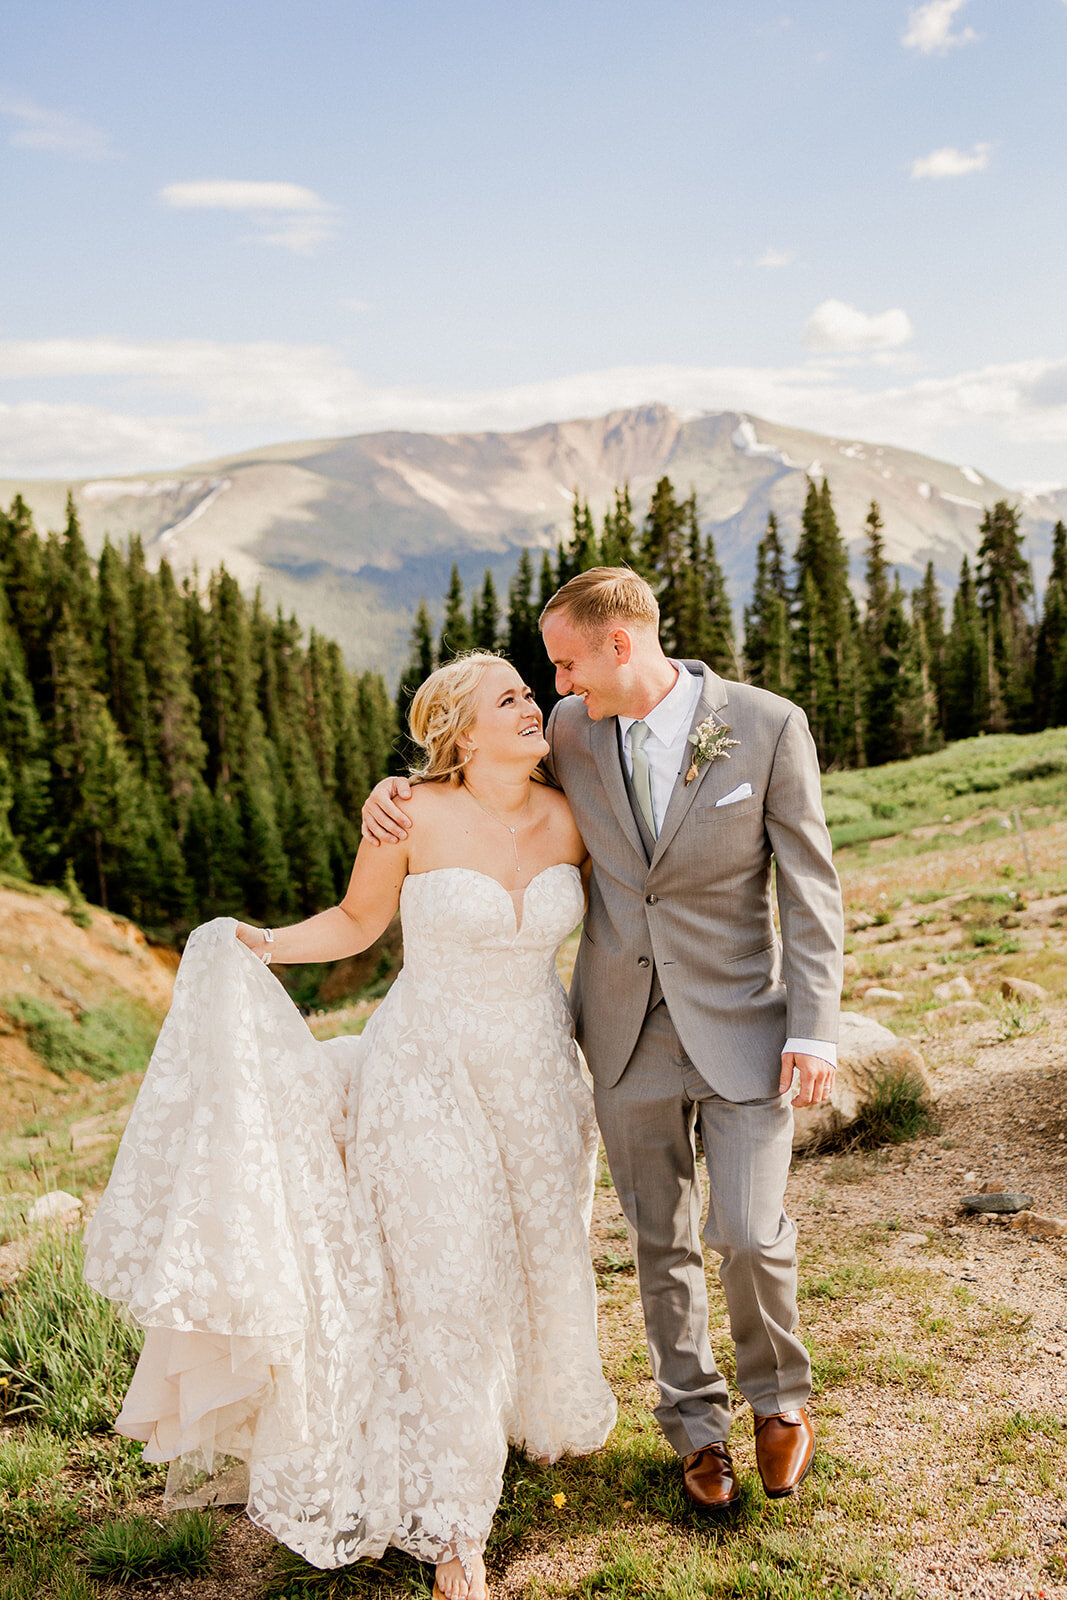 Shel-Francis-Creative-Colorado-Wedding-Photography-53